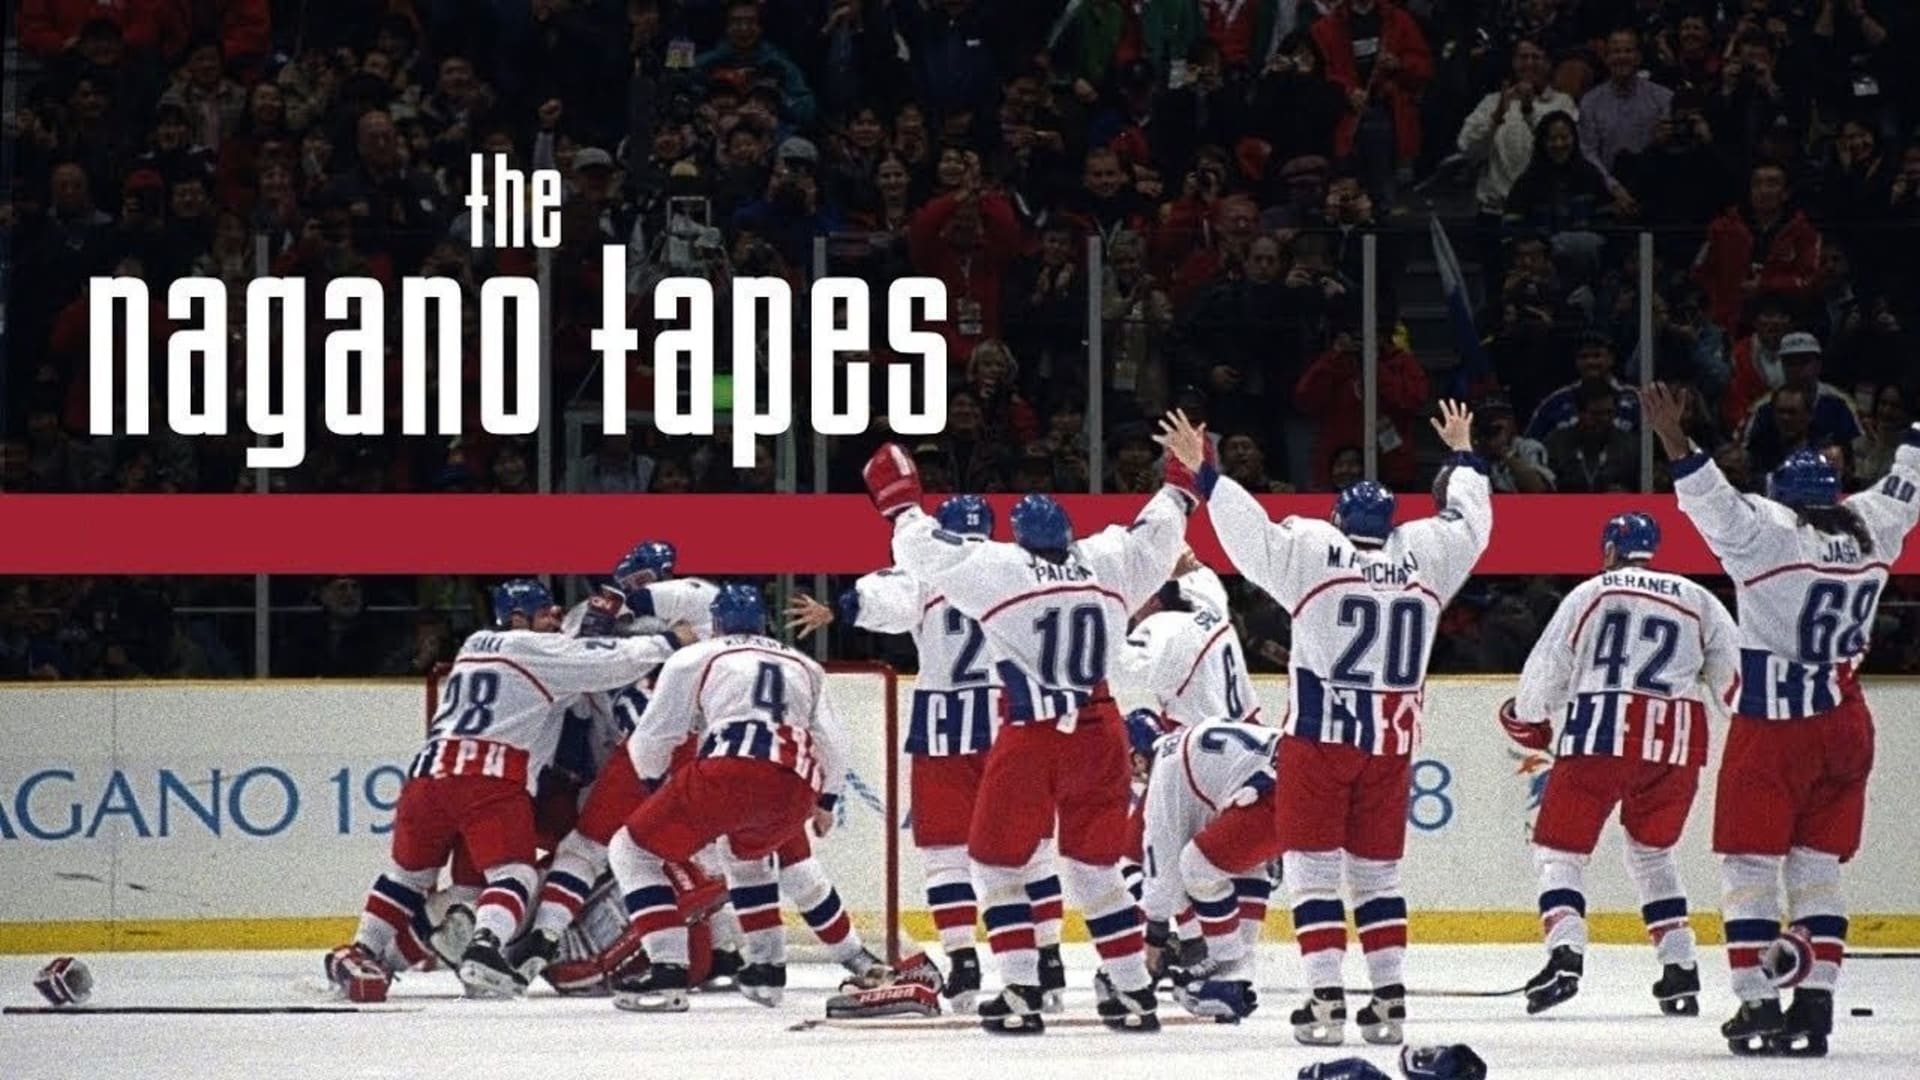 Film o památném triumfu českých hokejistů Nagano Tapes